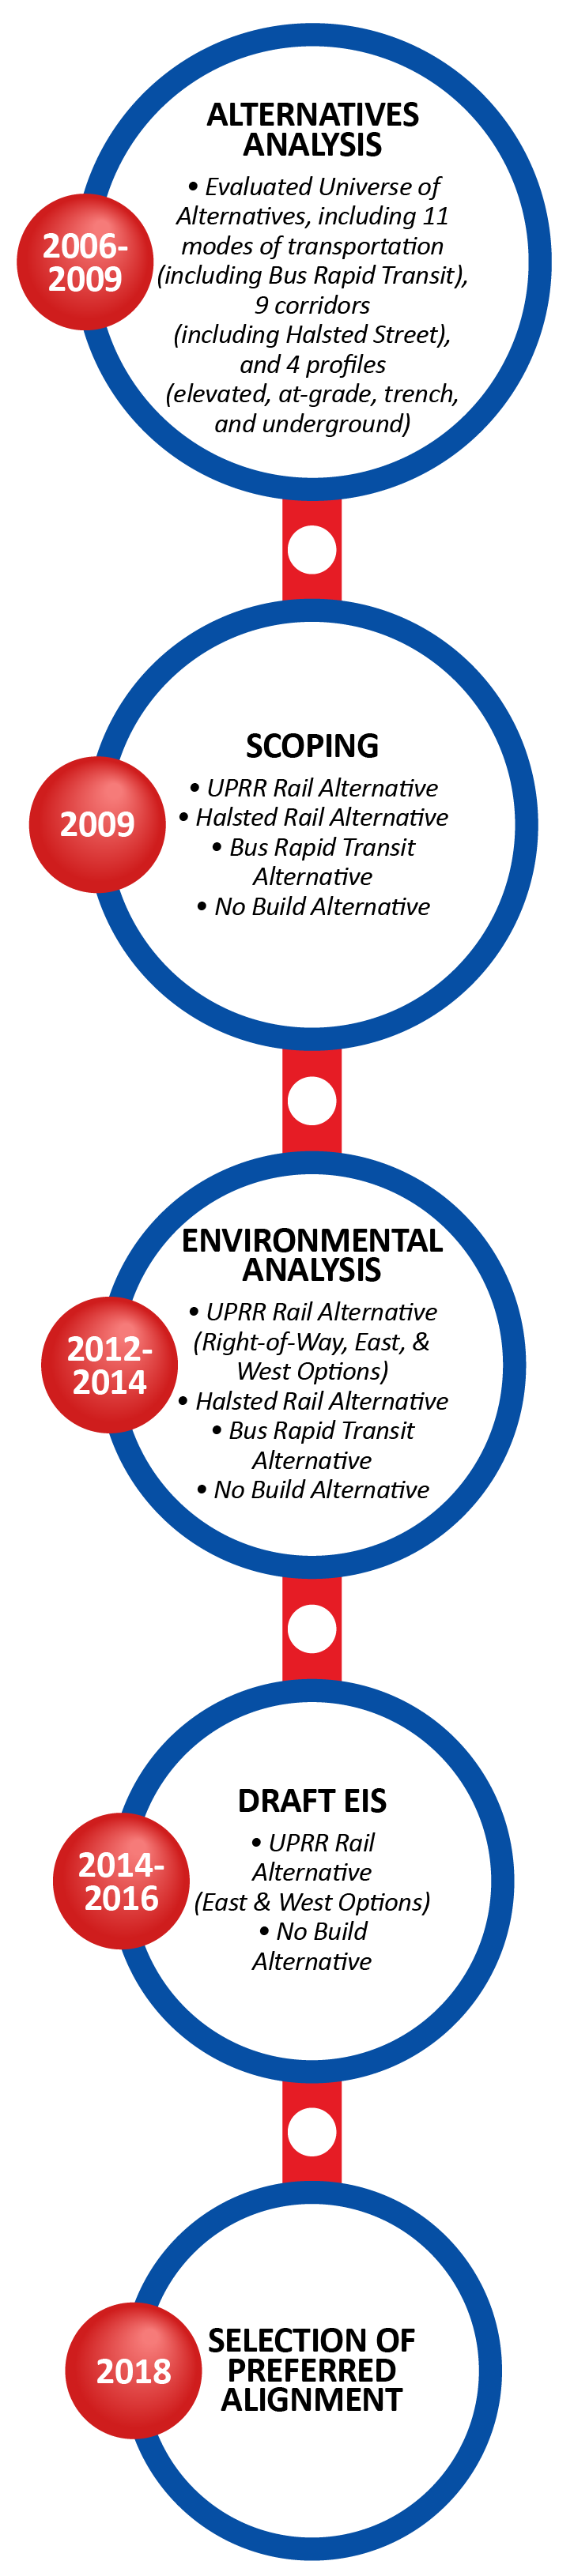 2006-2009: Alternatives analysis. 2009: Scoping. 2012-2014: Environmental analysis. 2014-2016: Draft Environmental Impact Study.